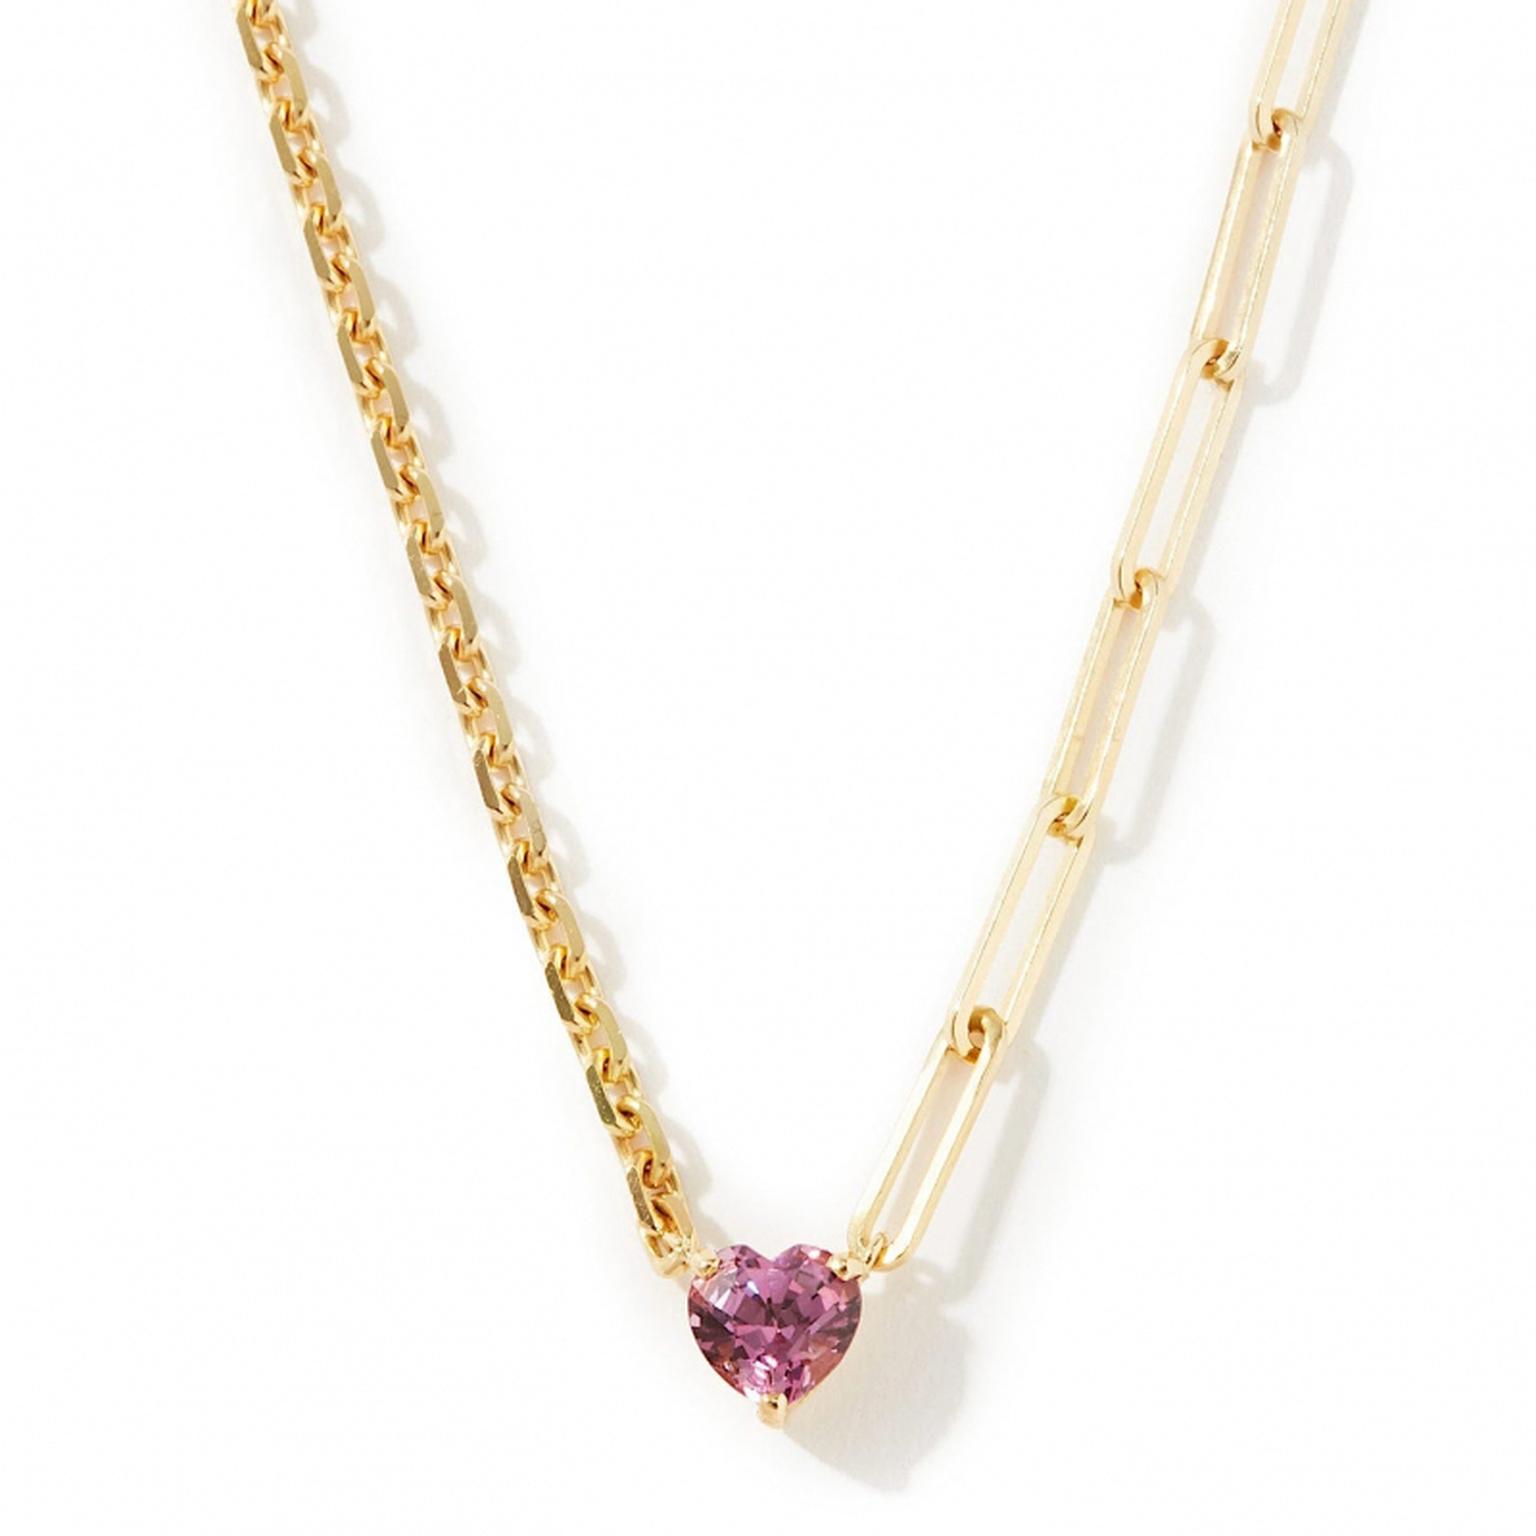 Valentine jewellery inspiration below £1,500